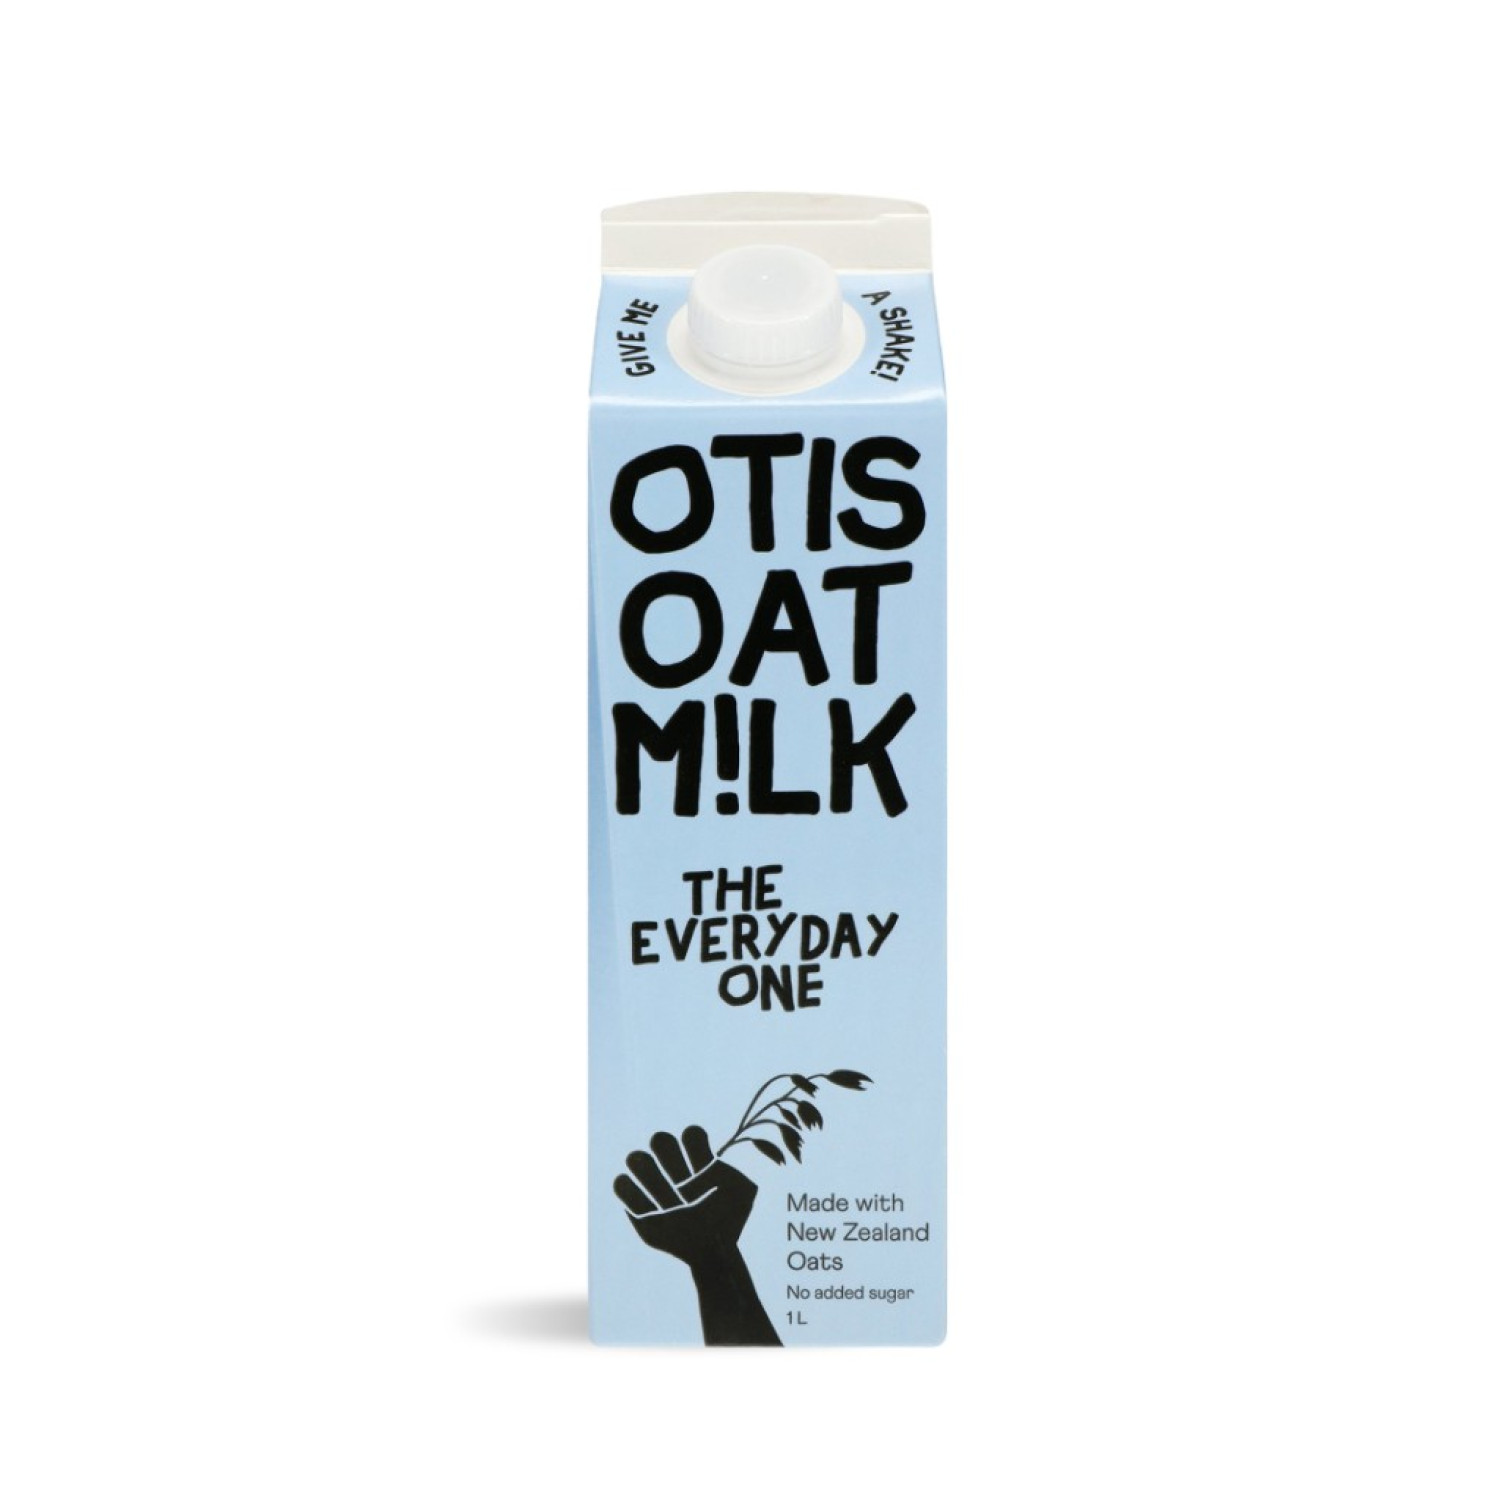 otis-oat-milk-the-everyday-1-l-exp-date-1223-654b45d772964.jpeg